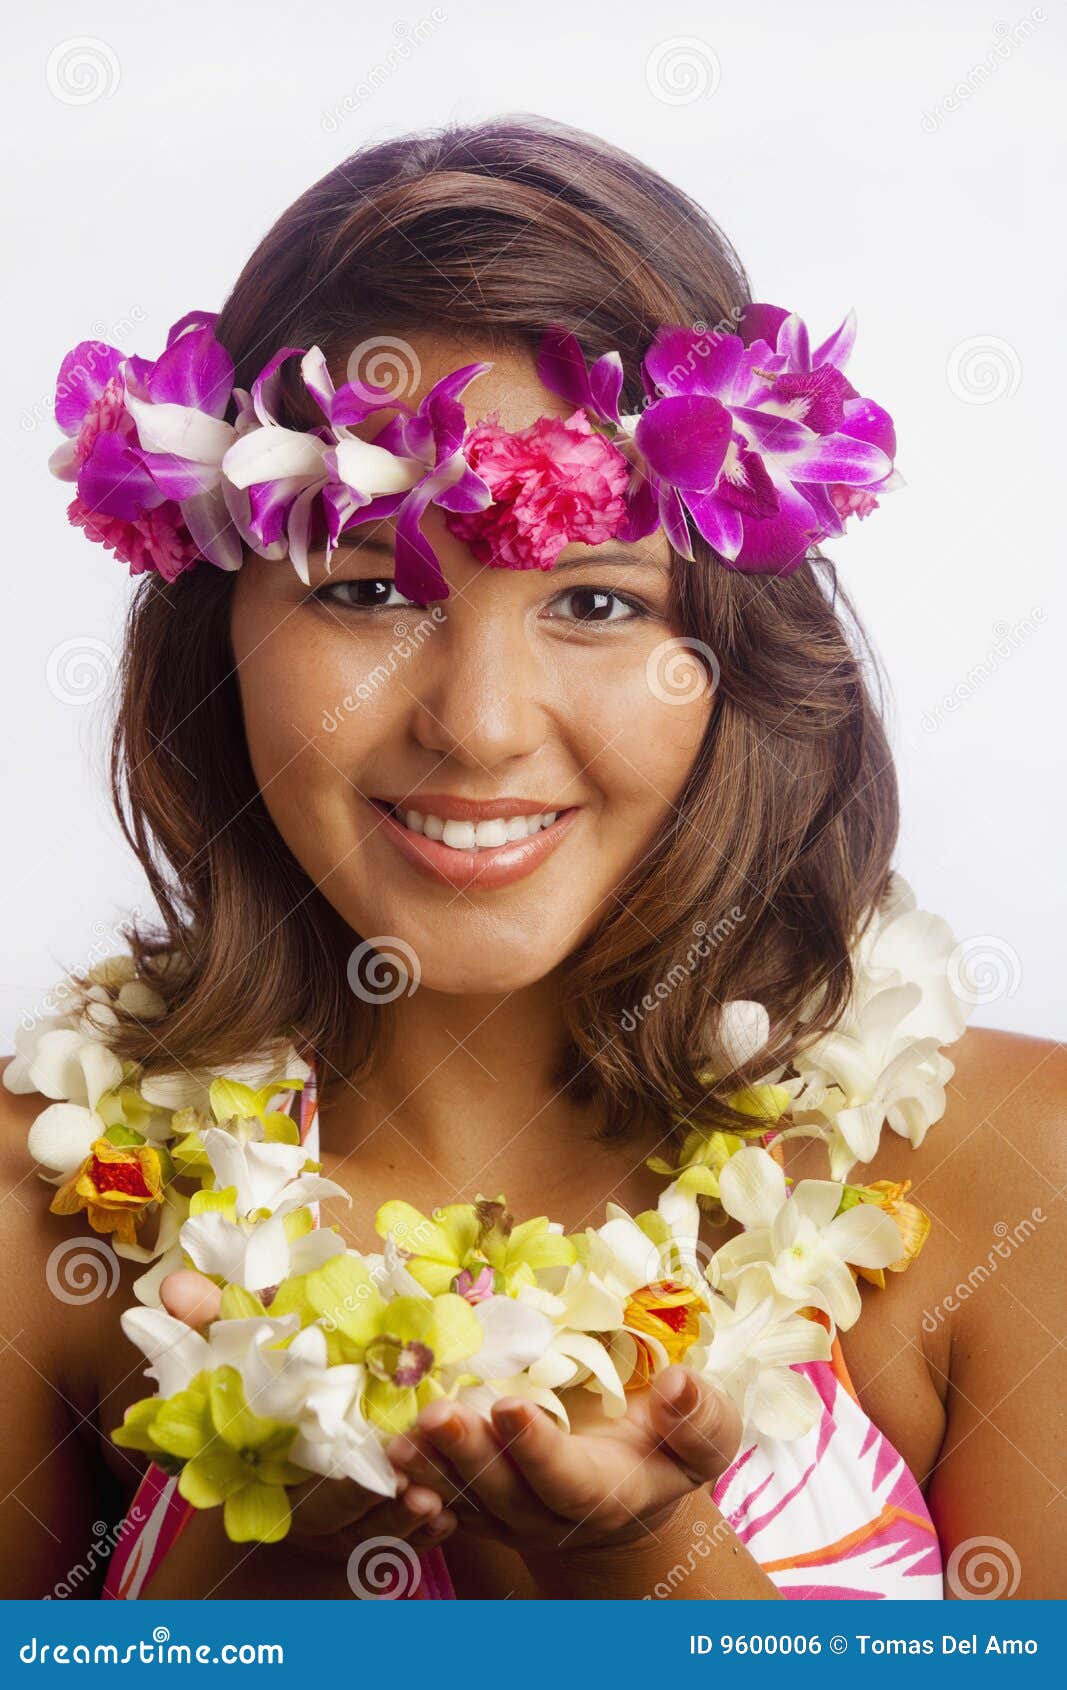 Hawaiian Girl Royalty-Free Stock Photo | CartoonDealer.com #7971729